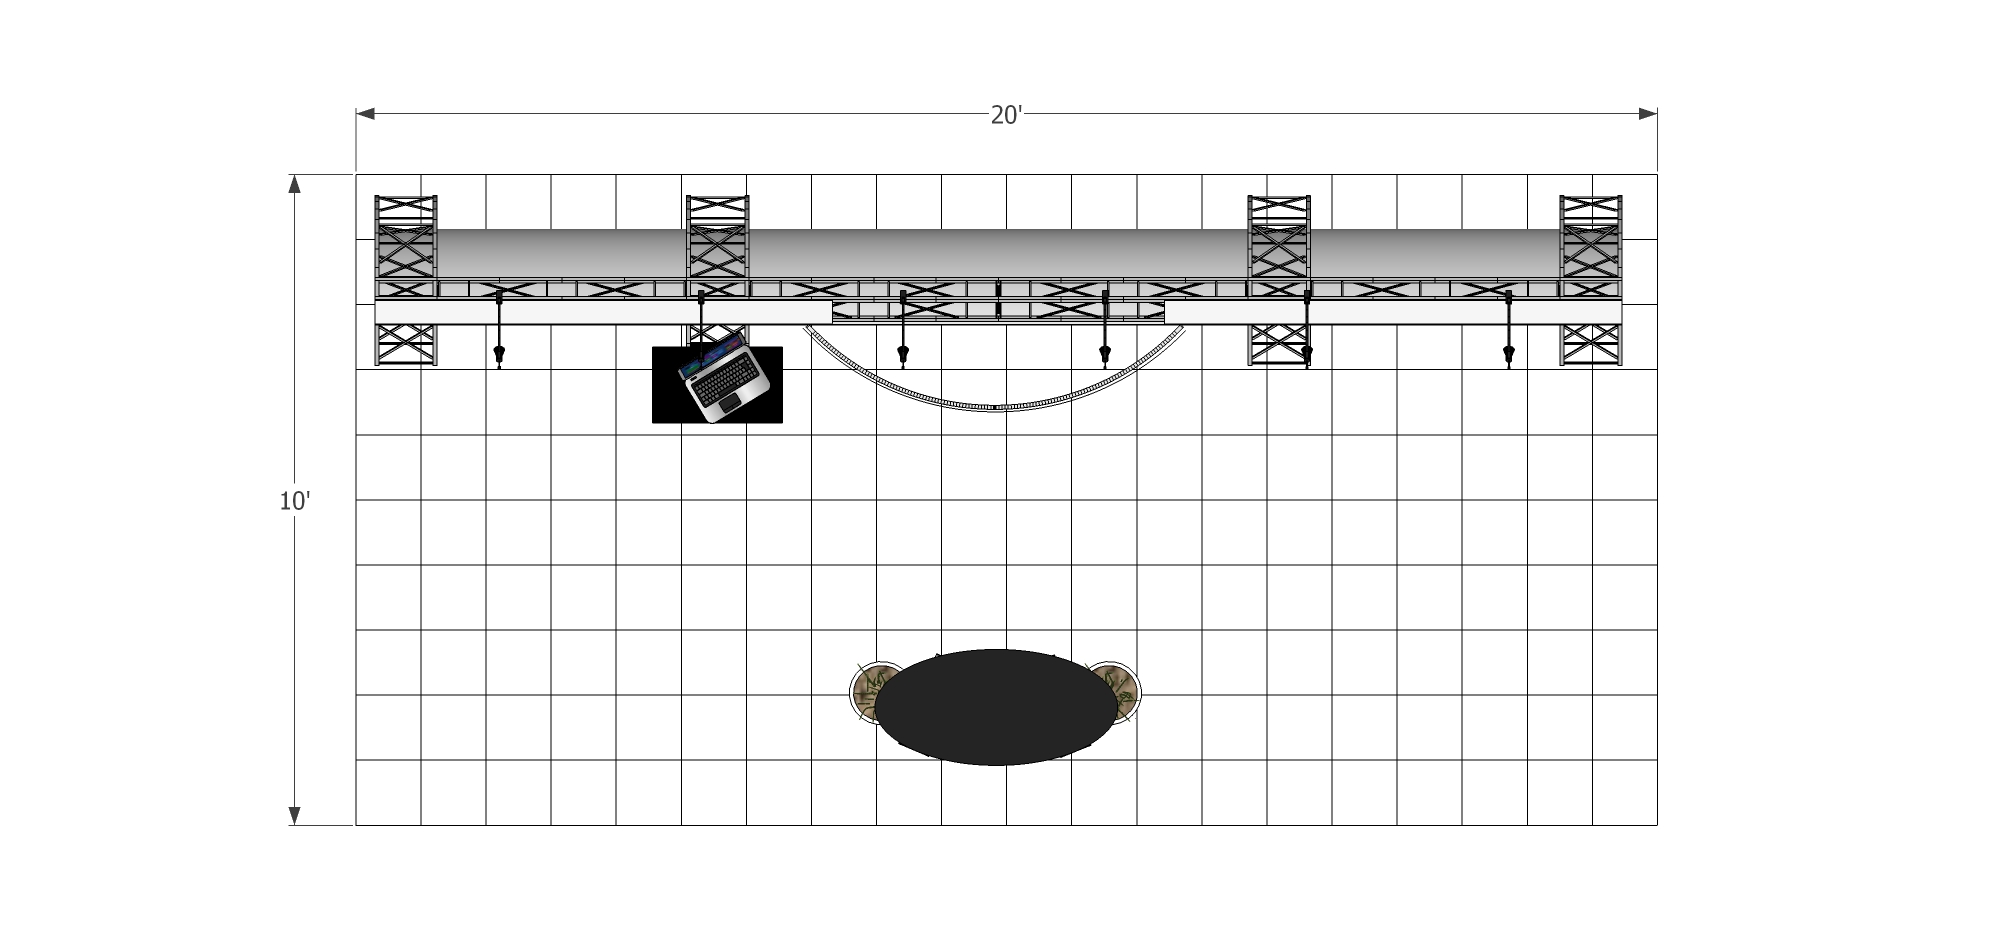 ez6 hillcrest 10x20 truss trade show display floor plan